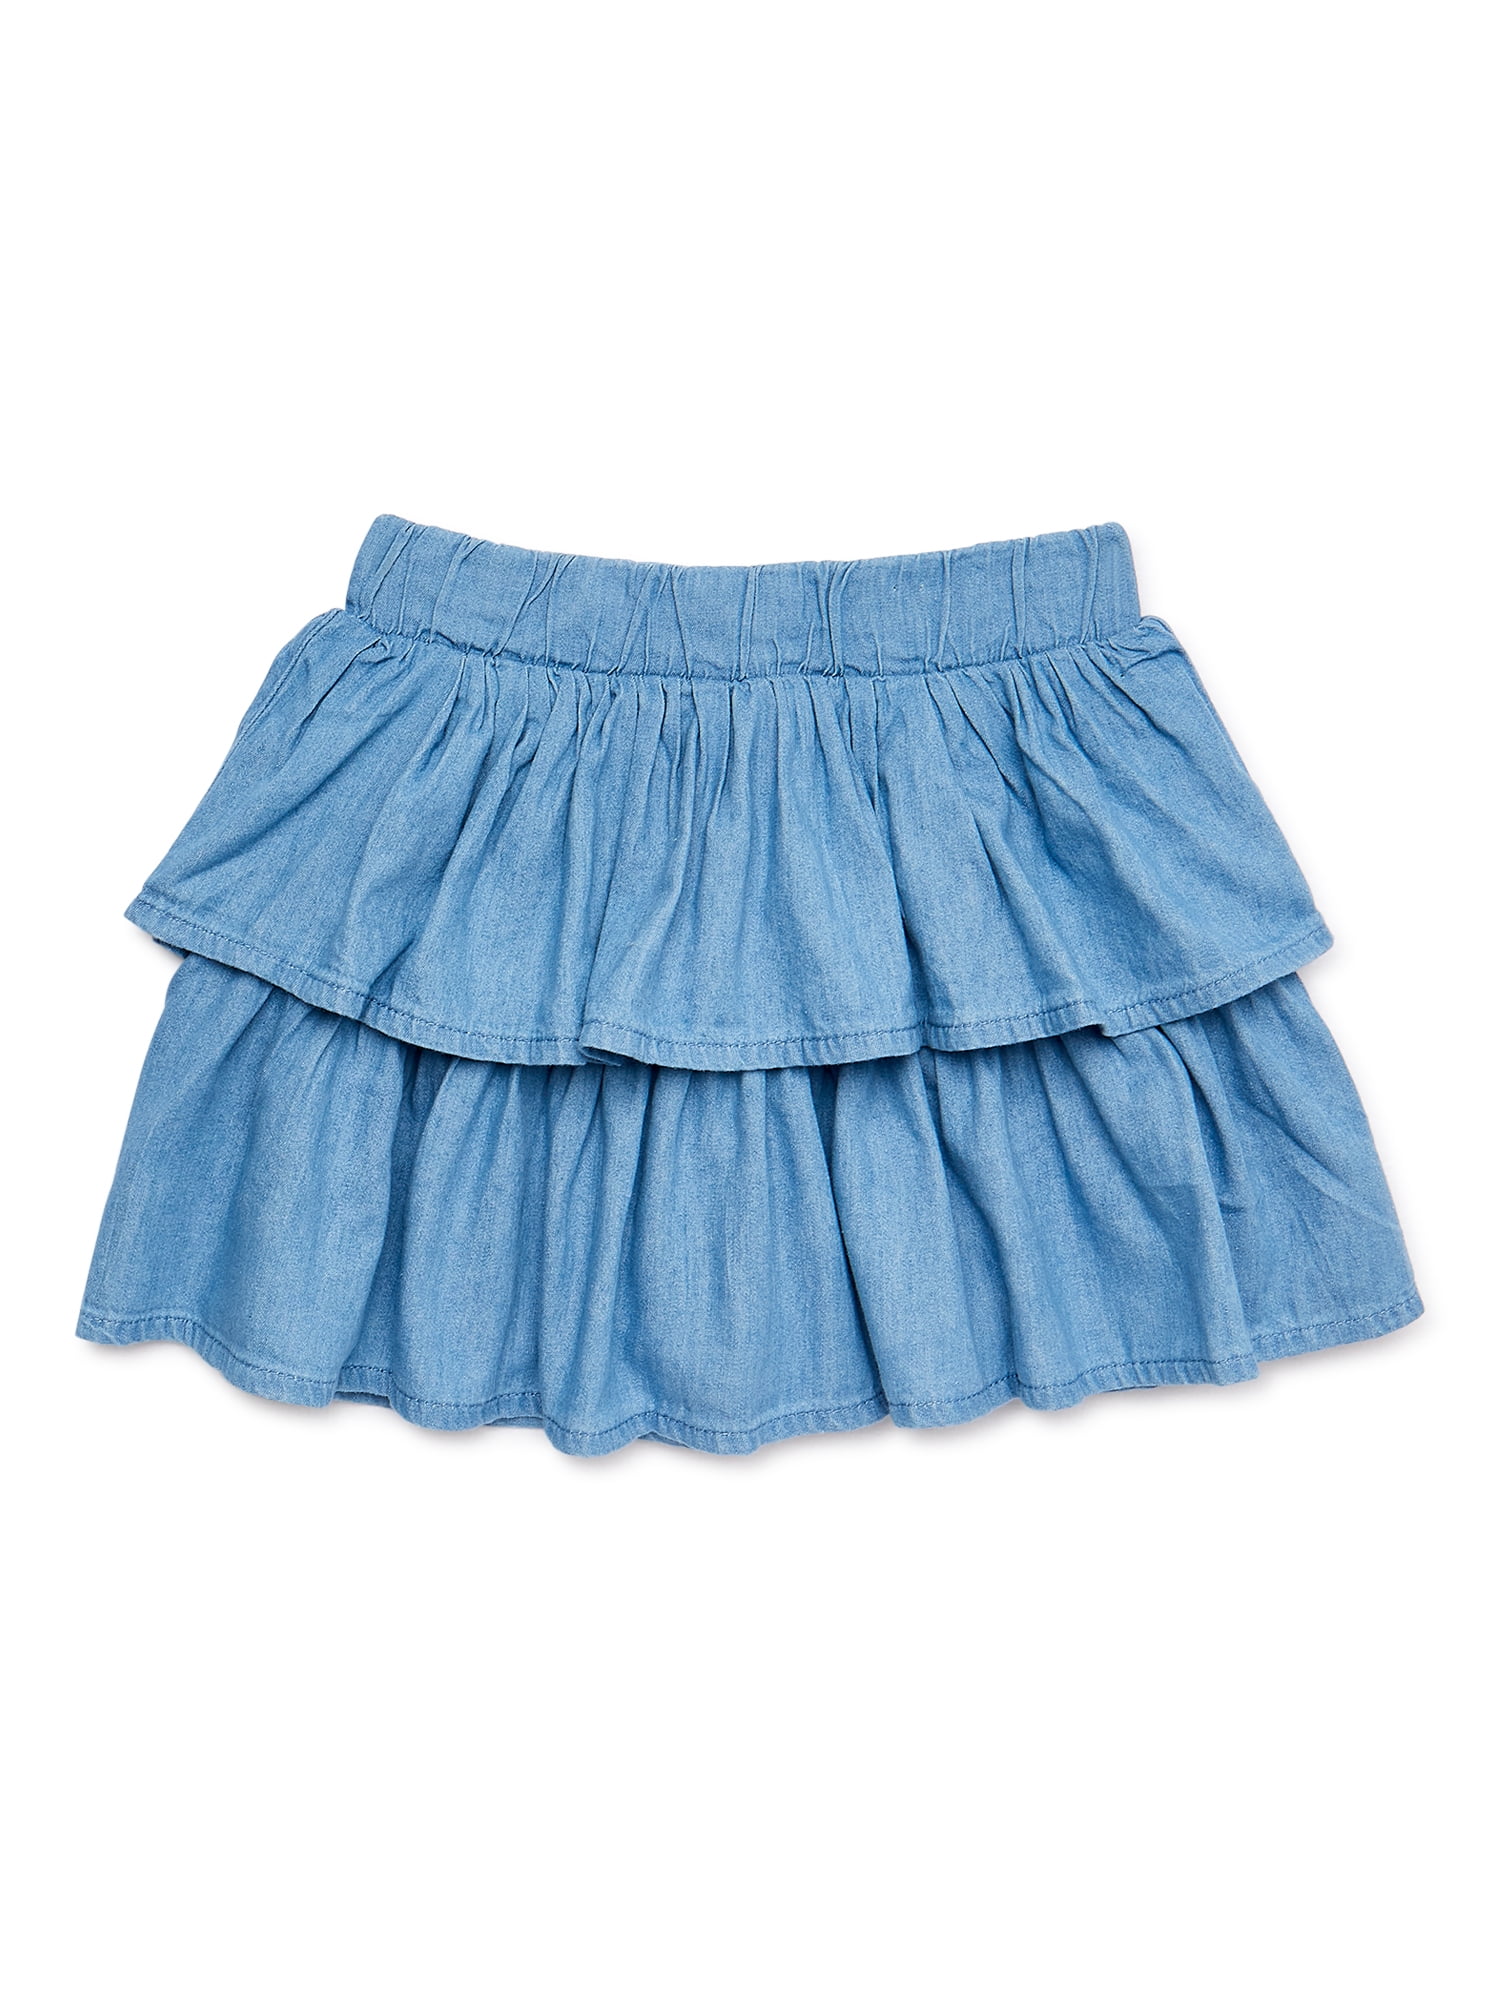 Garanimals Baby and Toddler Girls Tiered Skirt, Sizes 12M-5T - Walmart.com